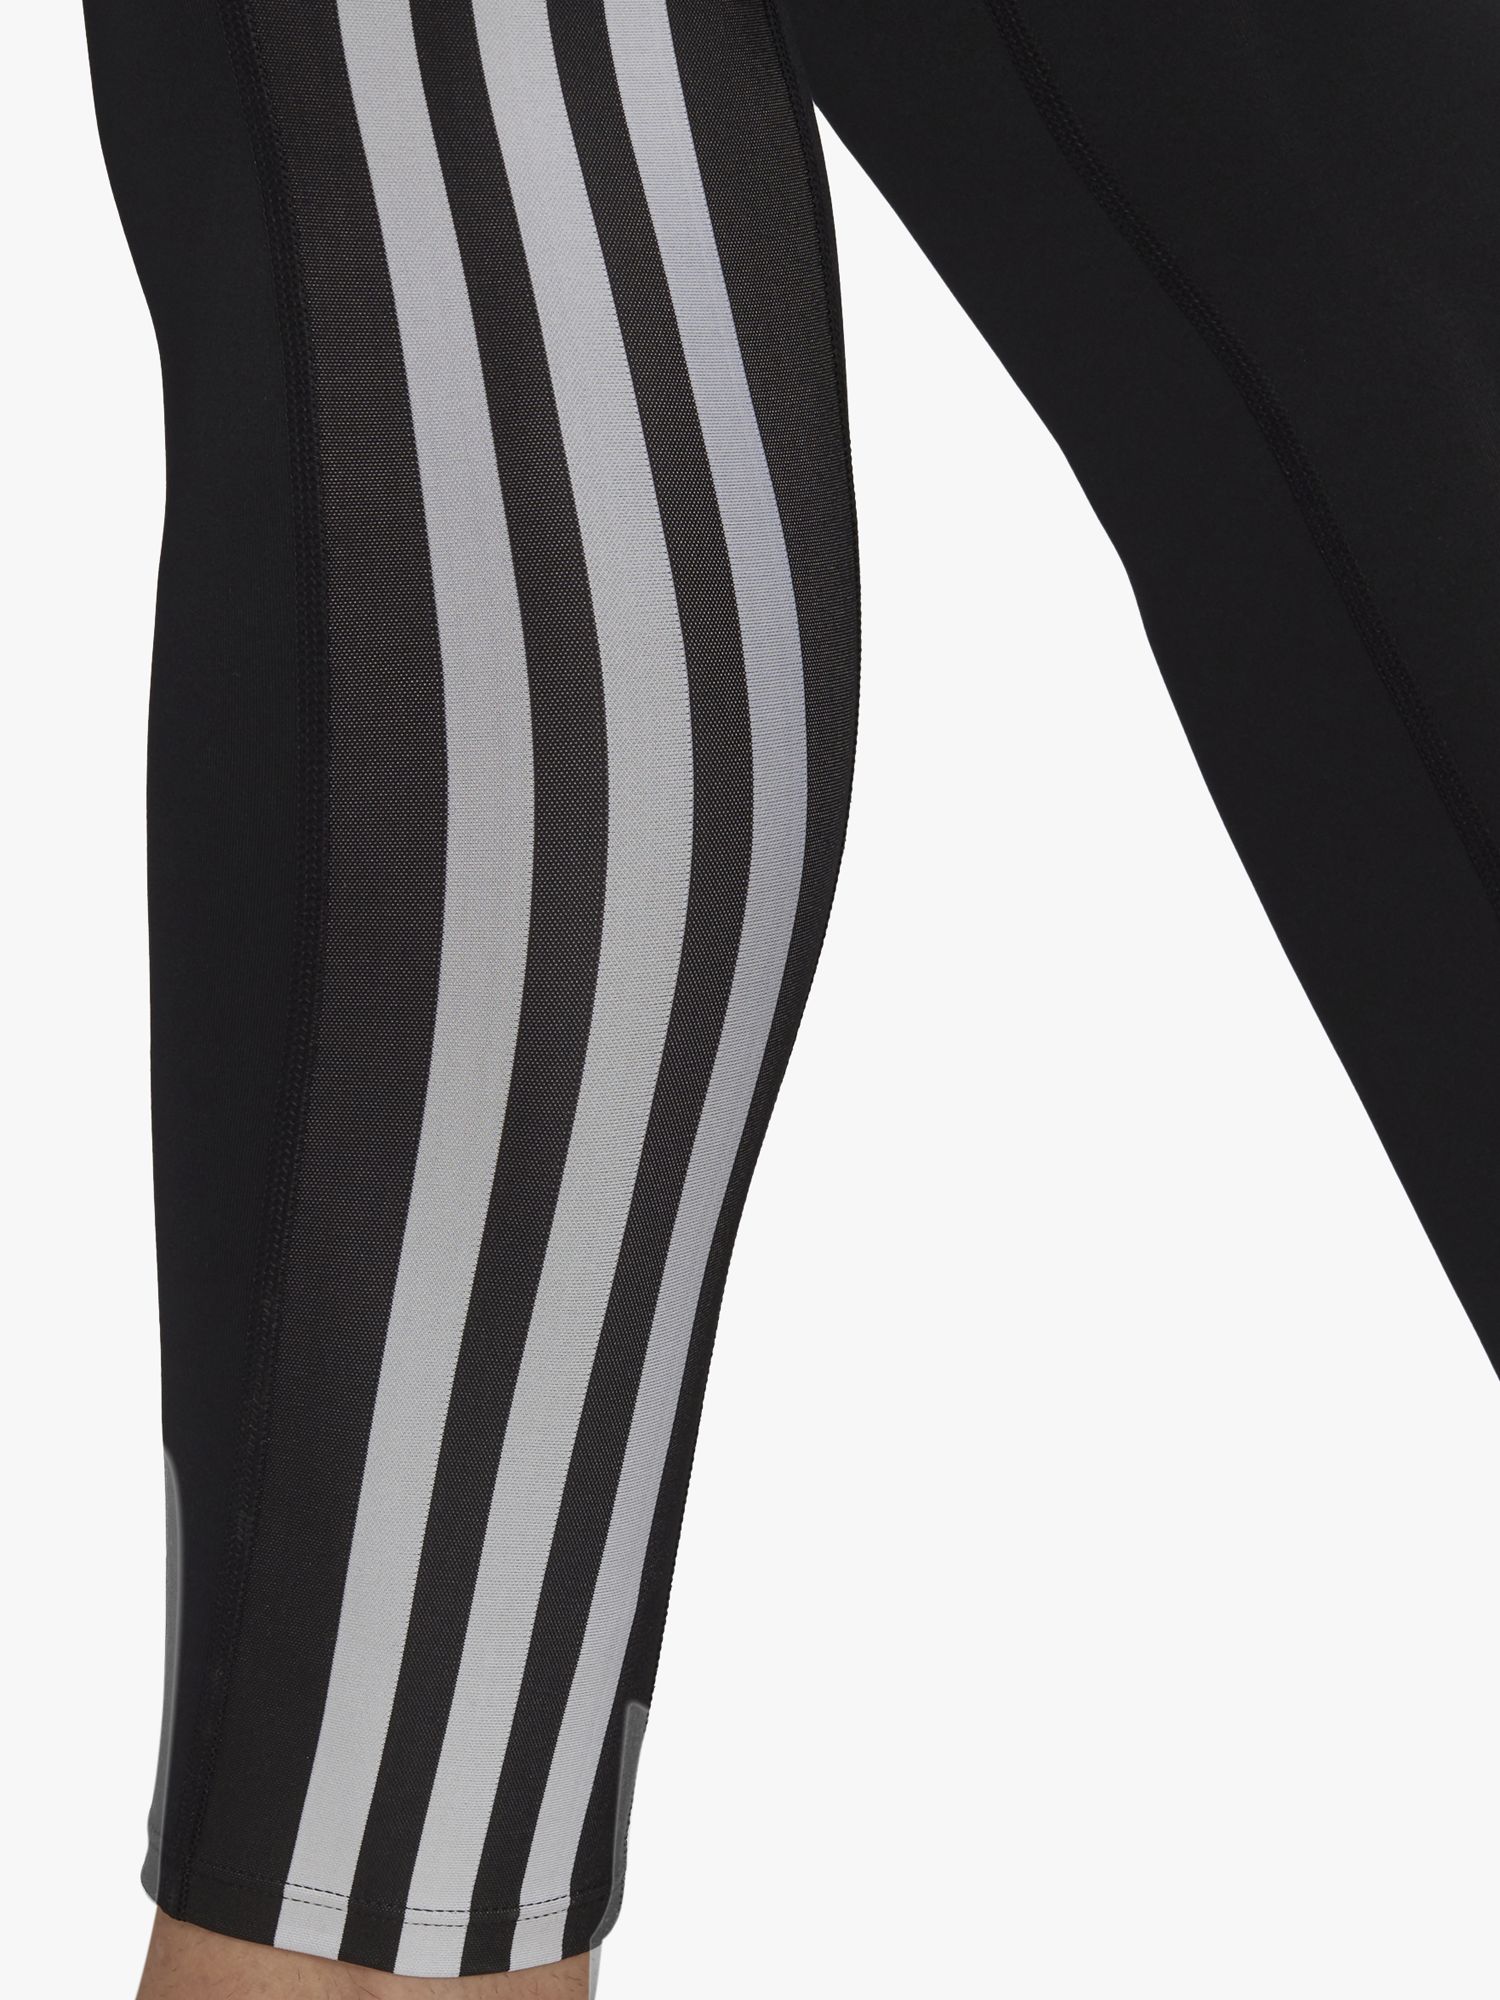 Adidas Training Techfit wrapped 3 stripe leggings in black